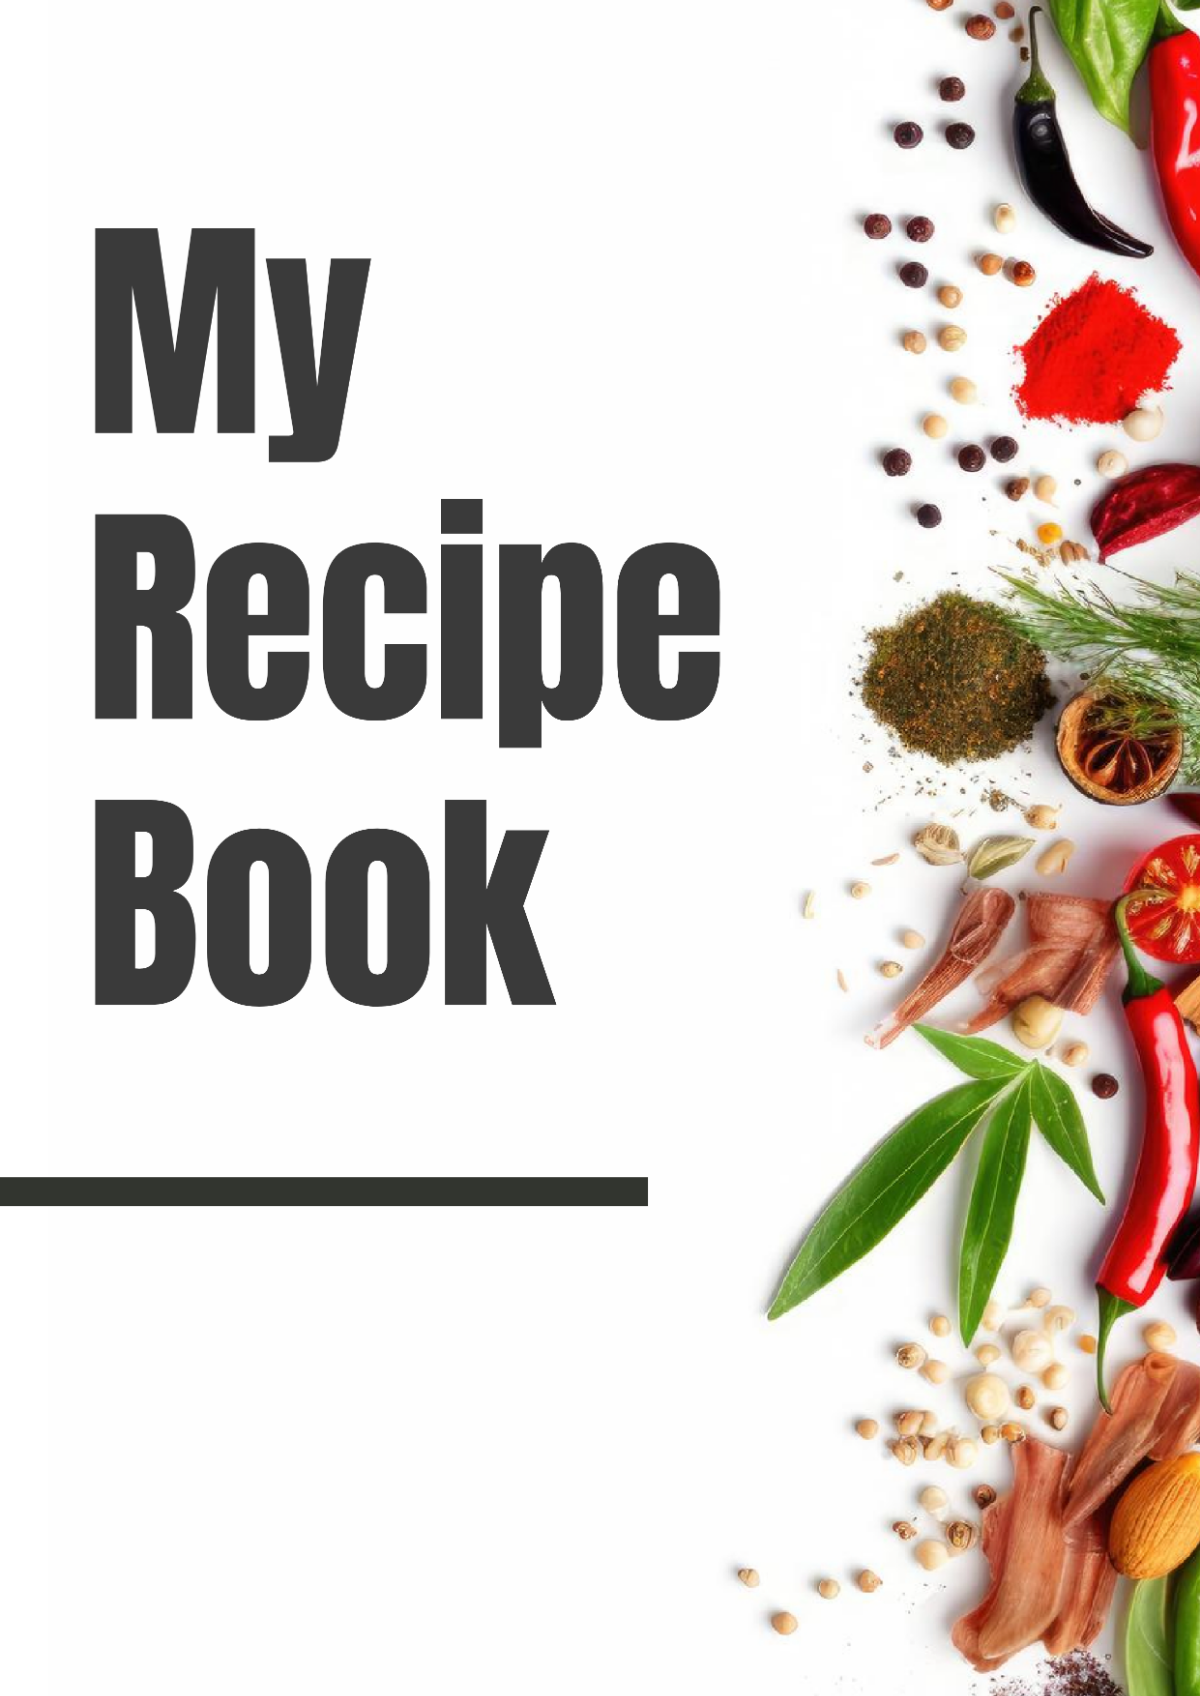 Recipe Journal Baking Tools, Blank Cookbook, Hand Illustrated